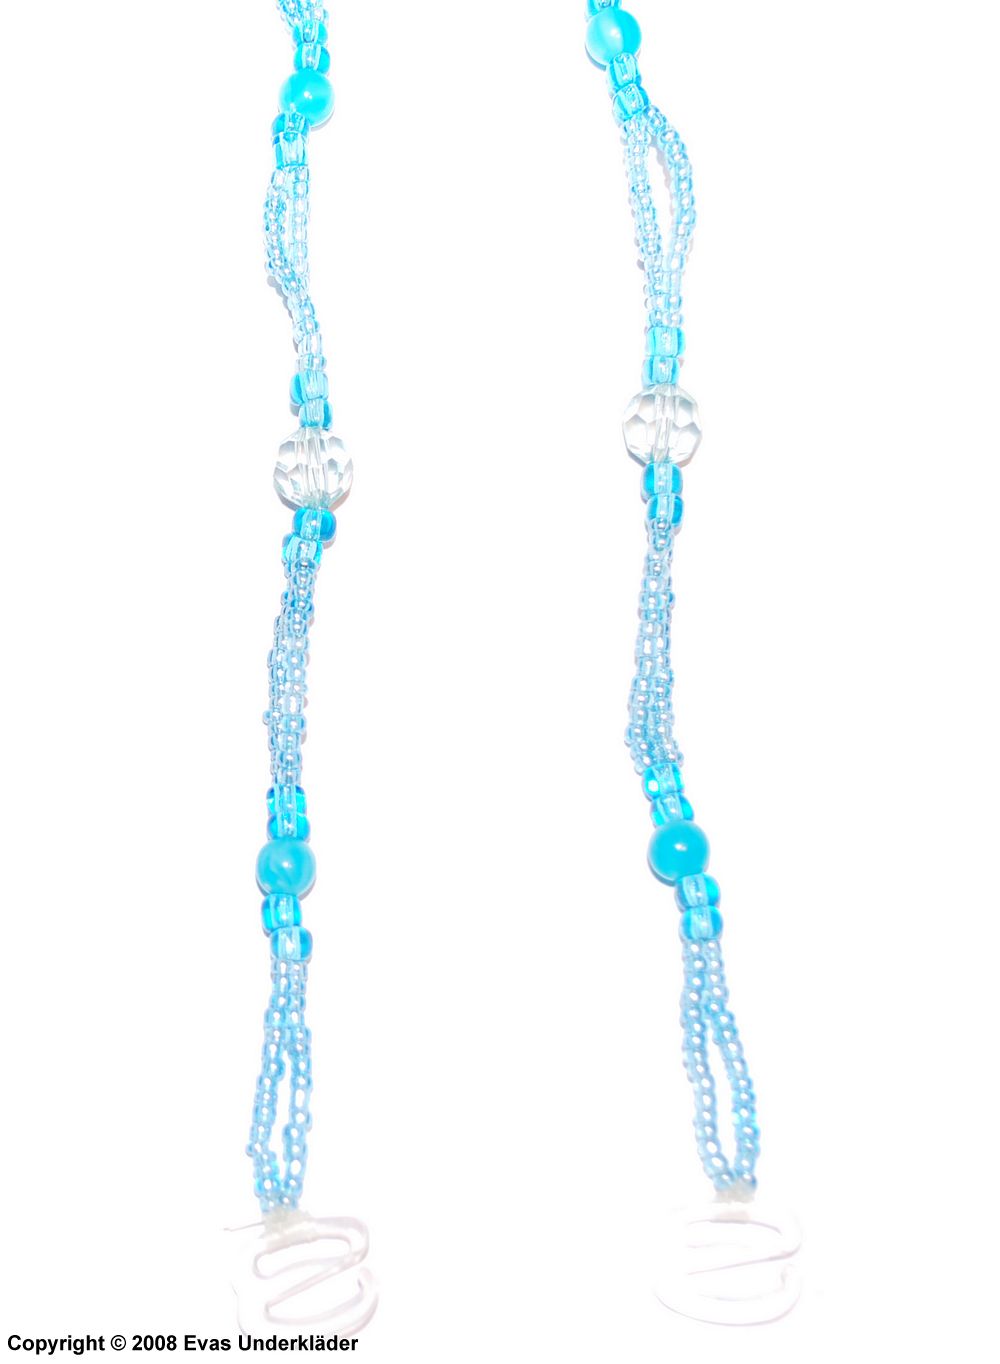 Bra straps with bright beads